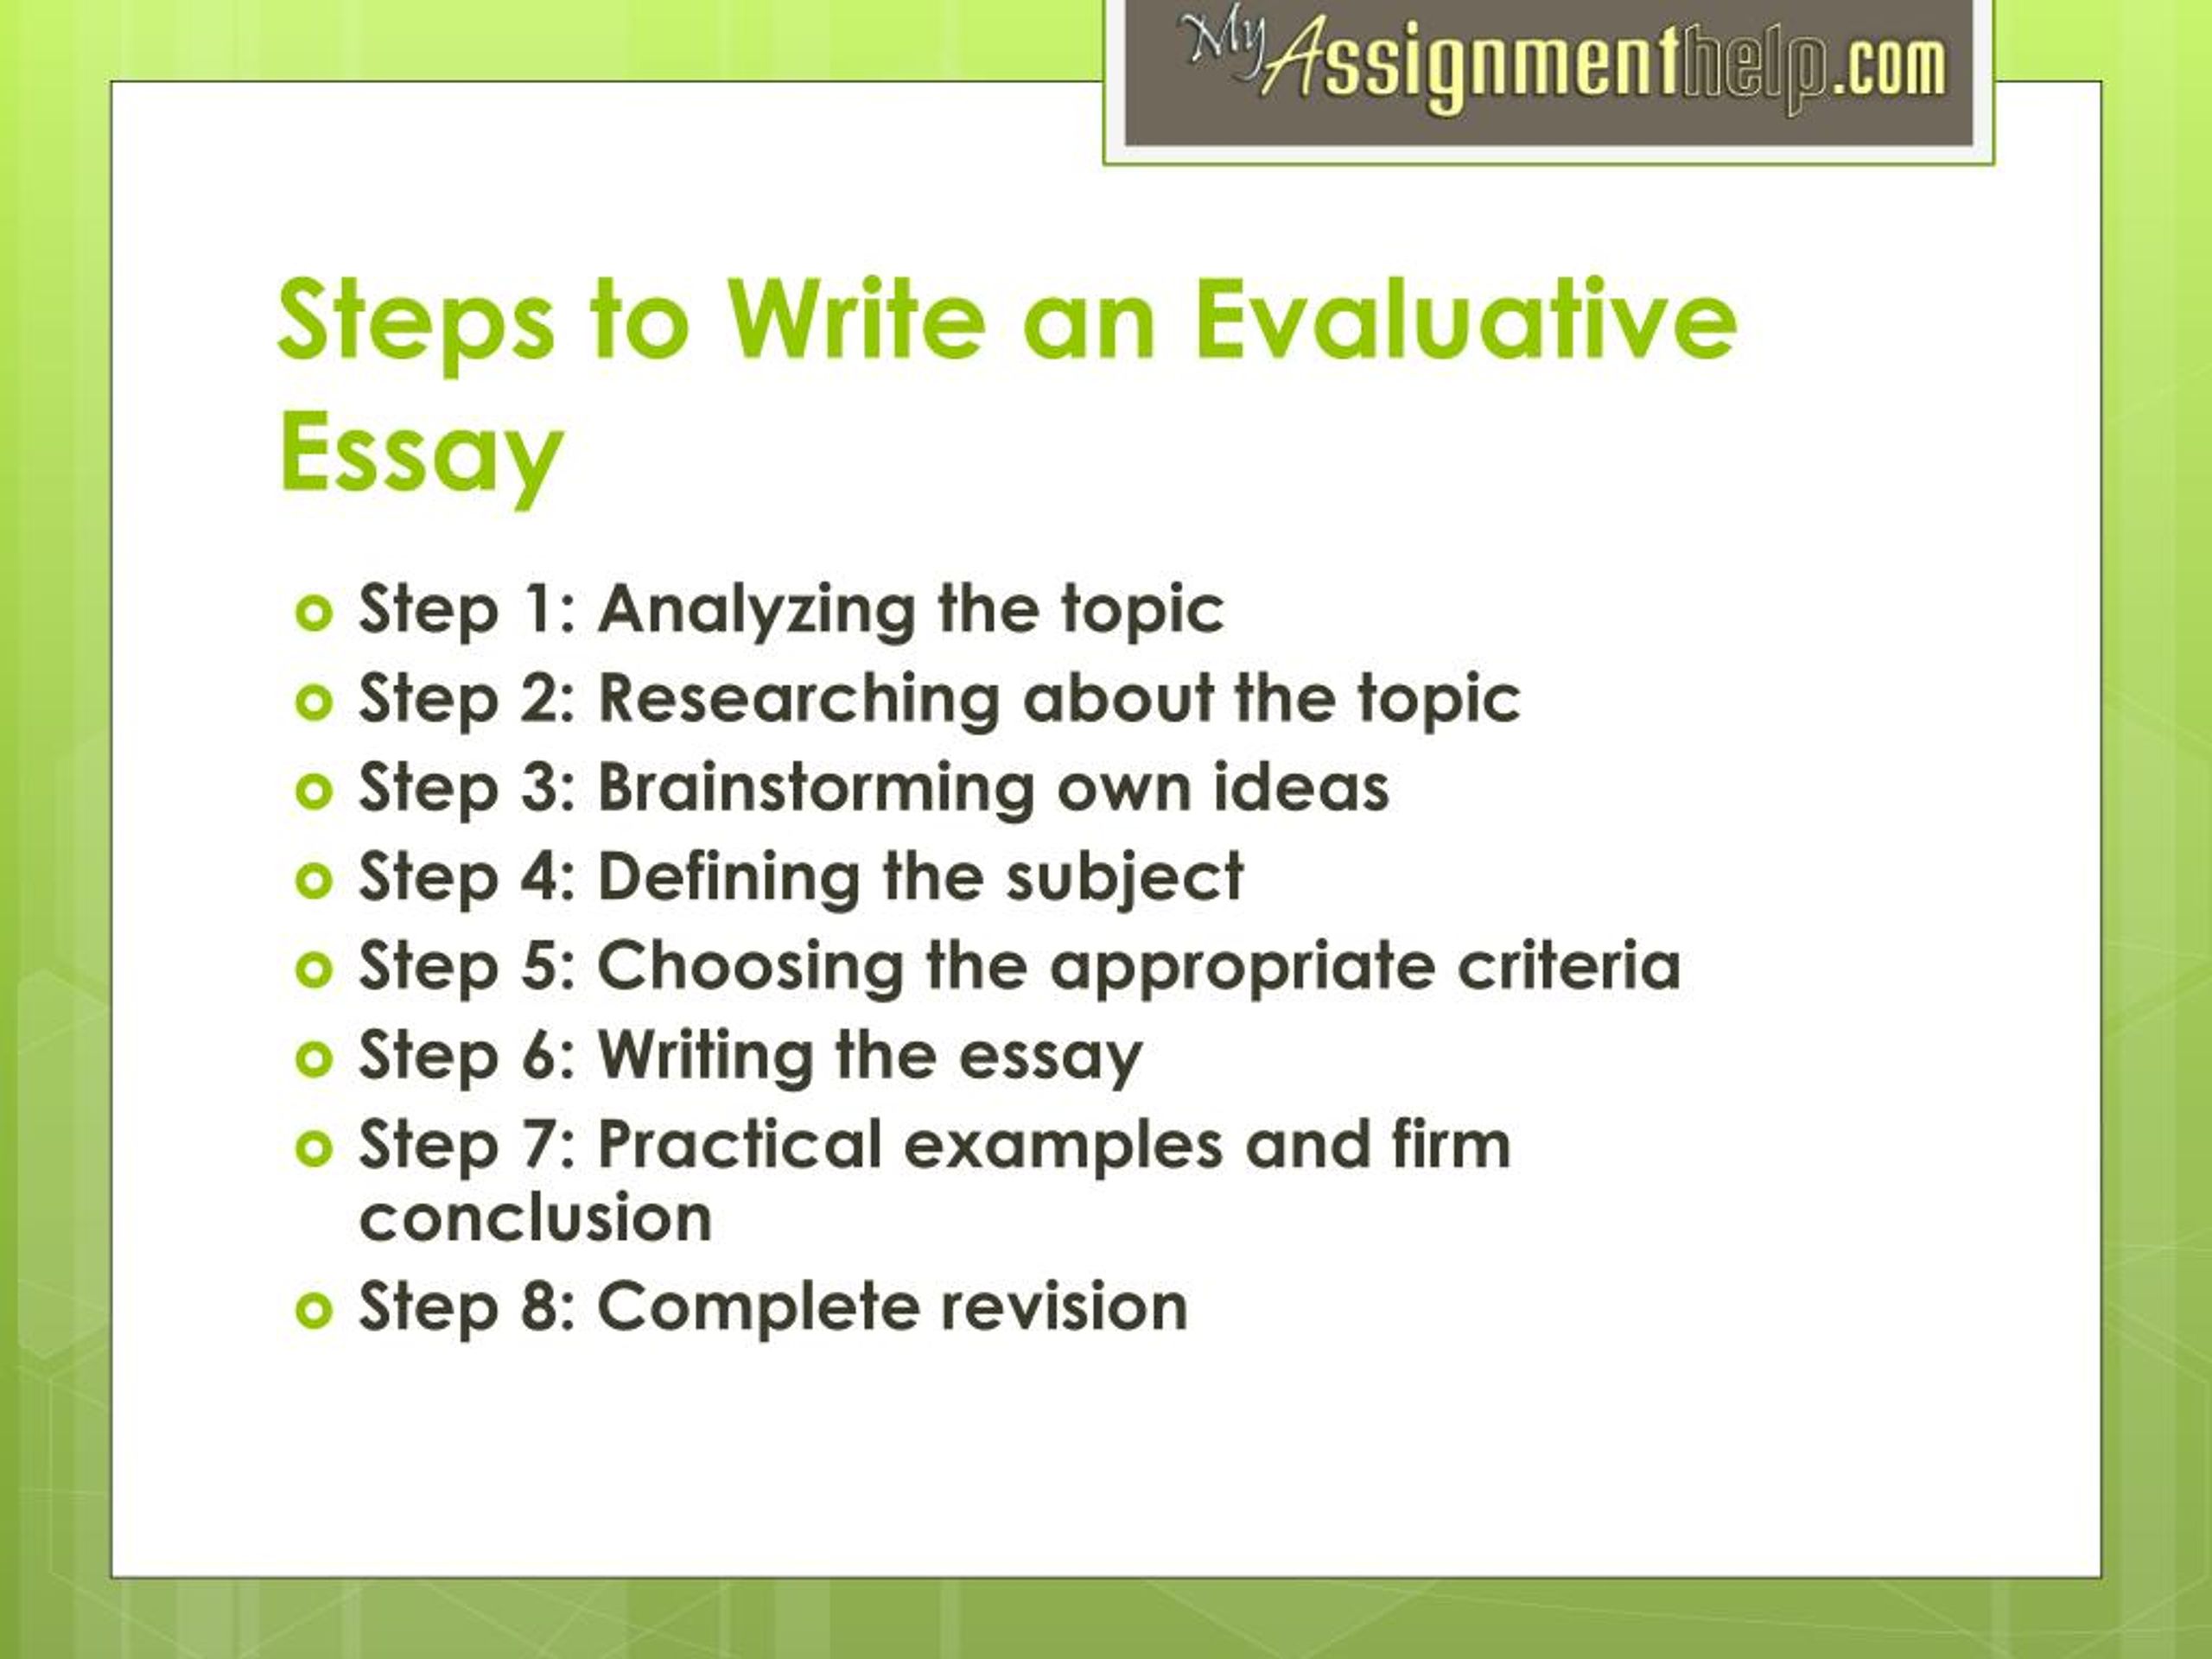 evaluative essay phrases